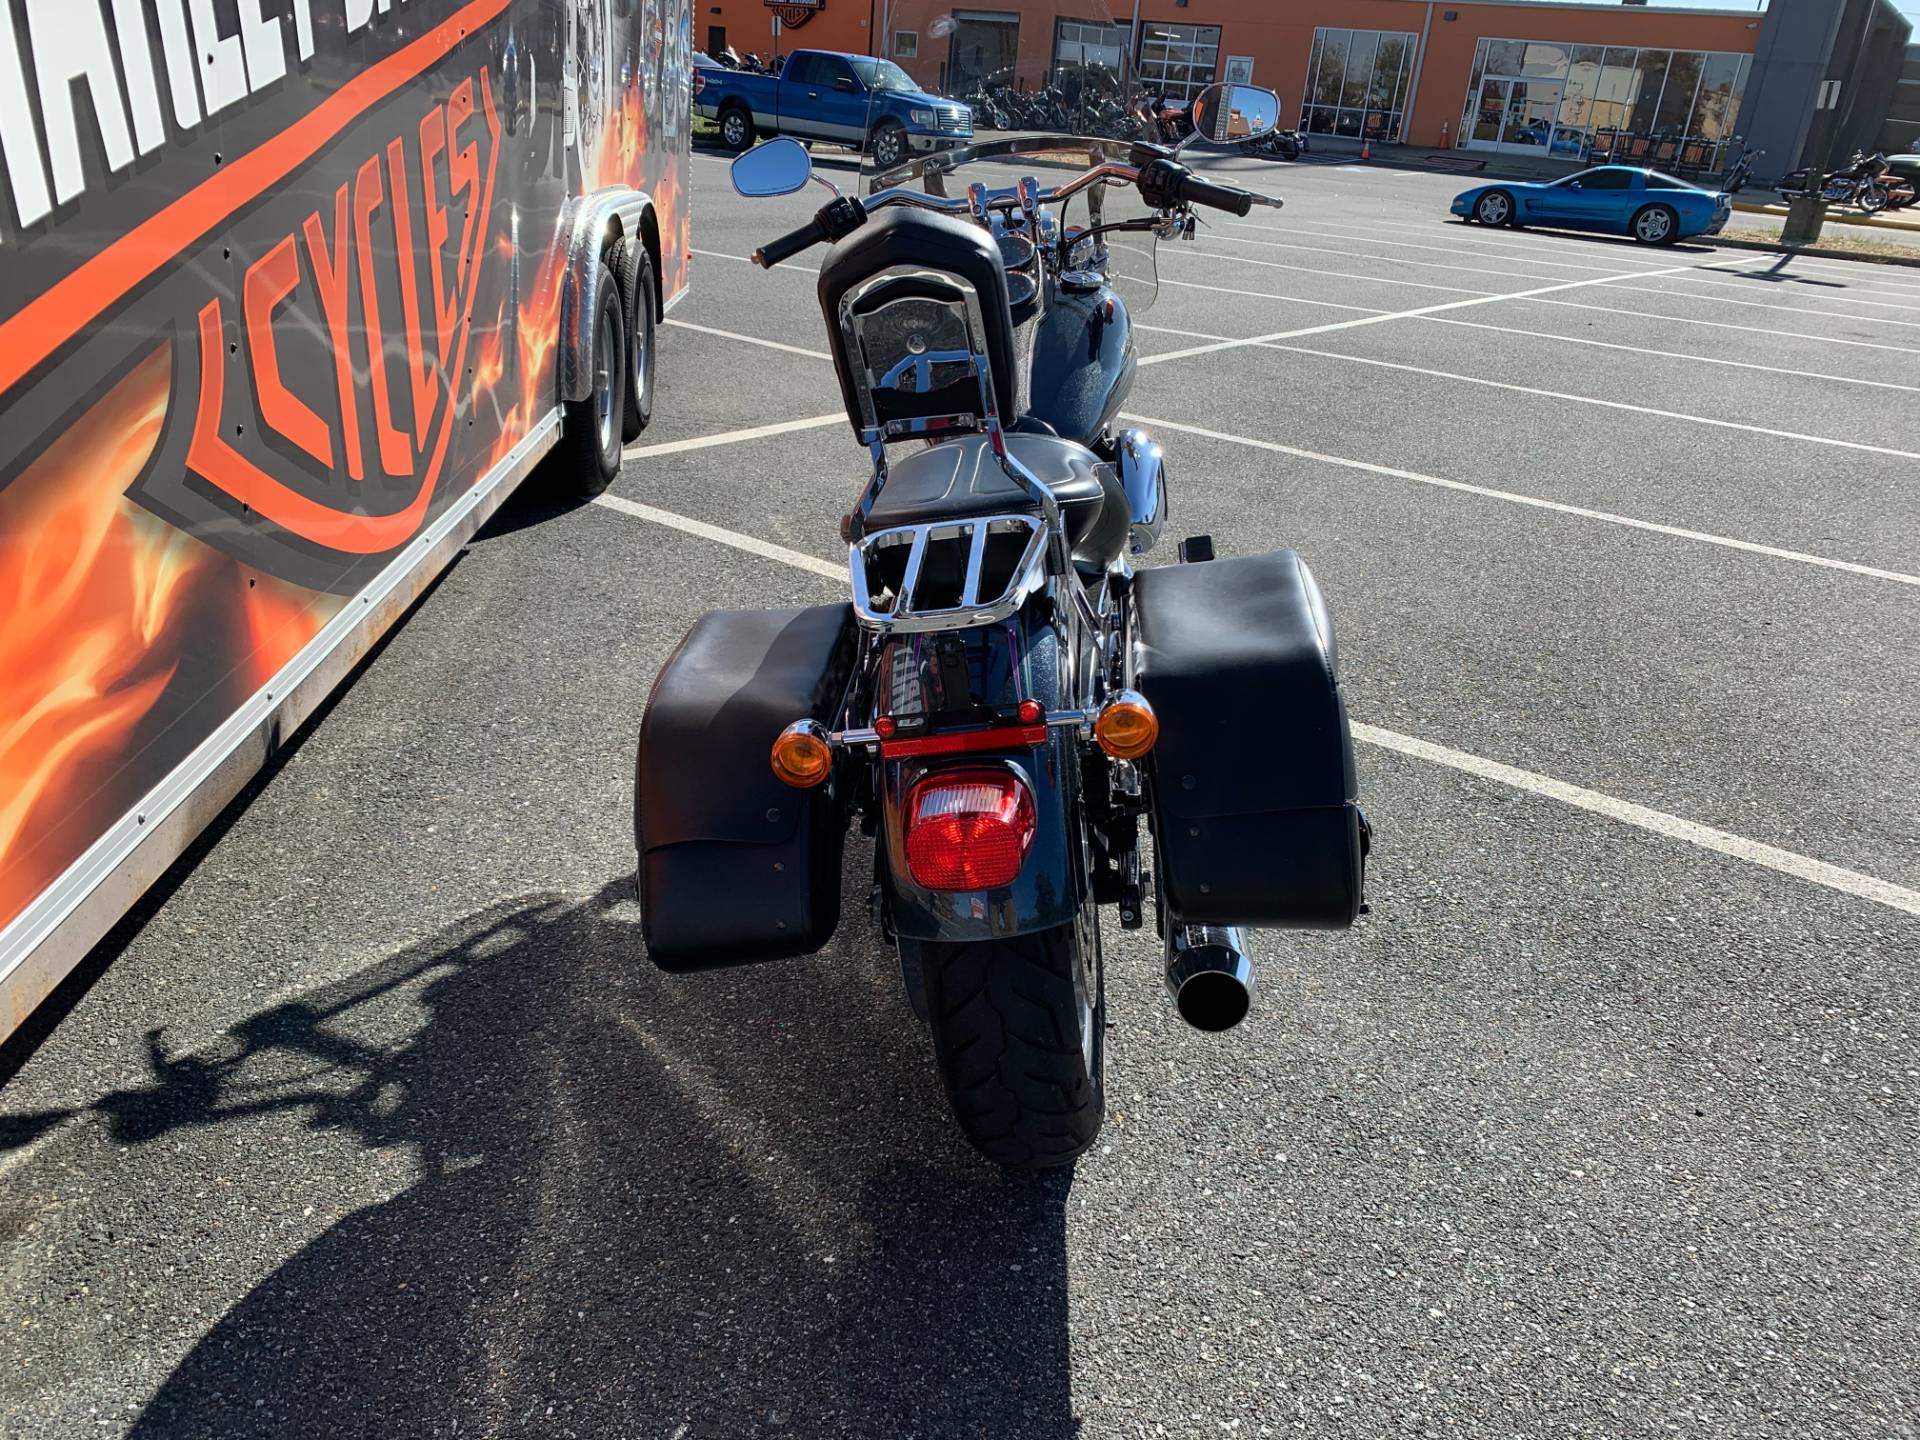 2015 Harley-Davidson Low Rider® in Fredericksburg, Virginia - Photo 5